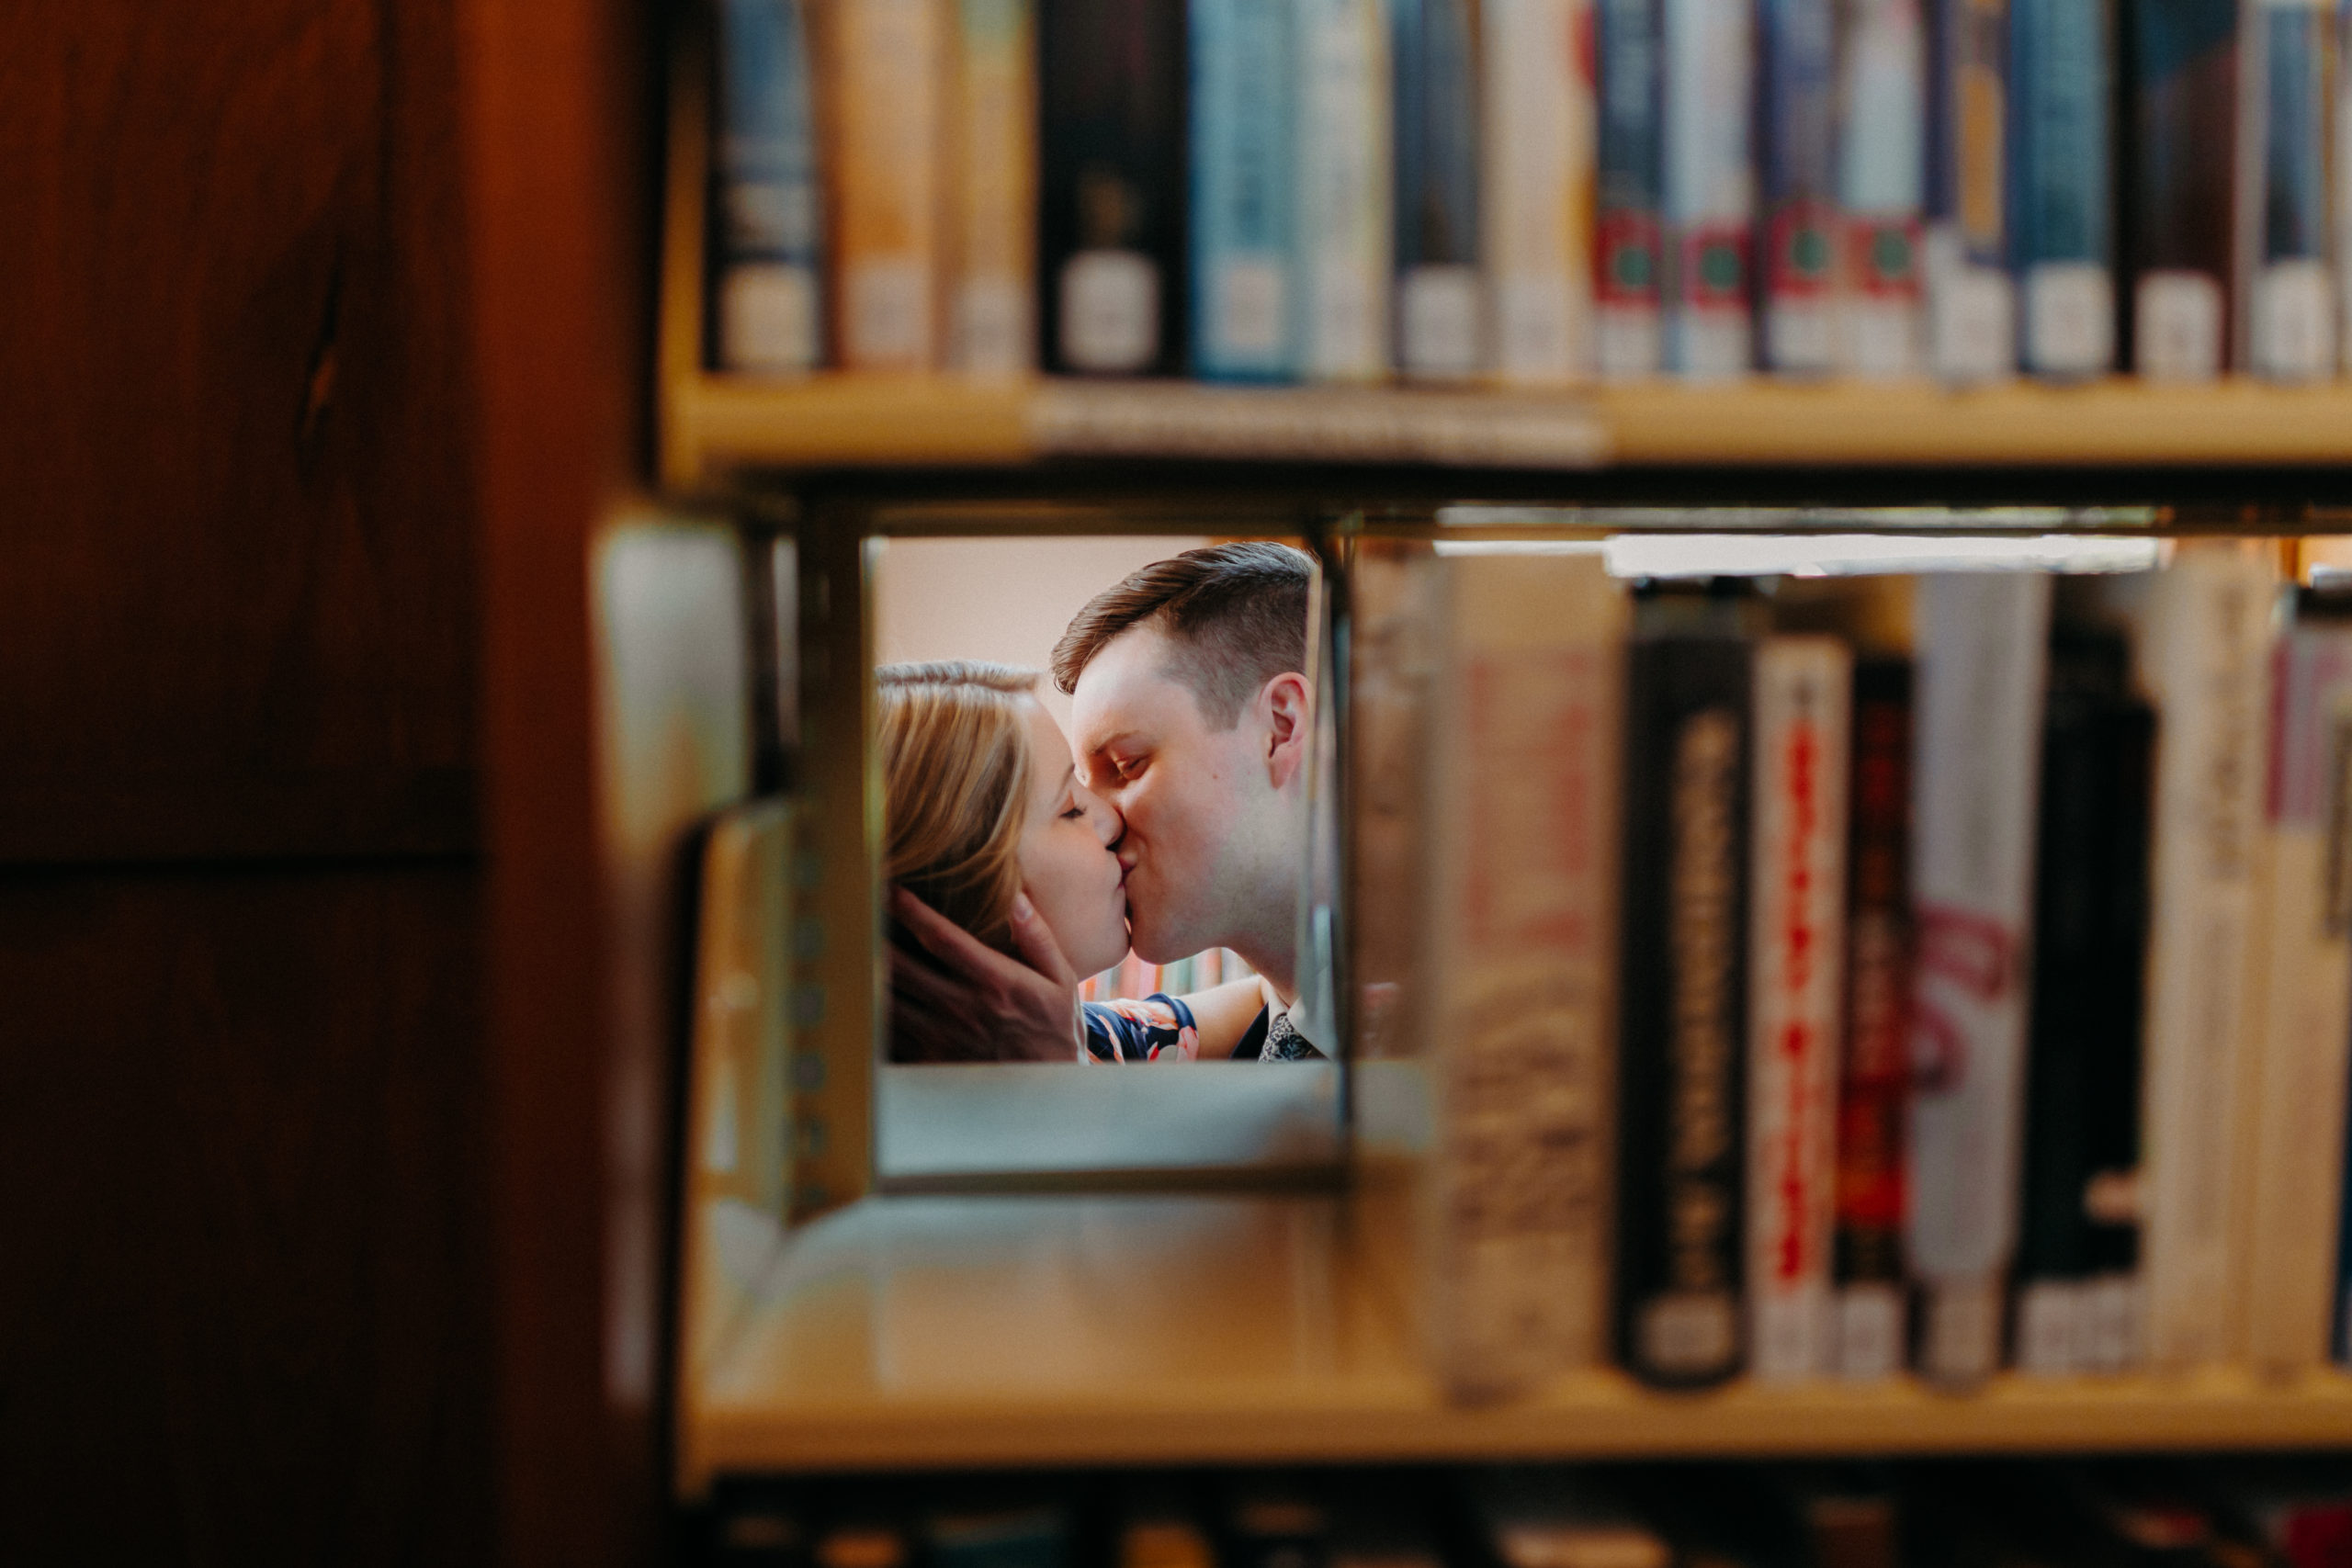 Man and woman kiss next to bookshelf